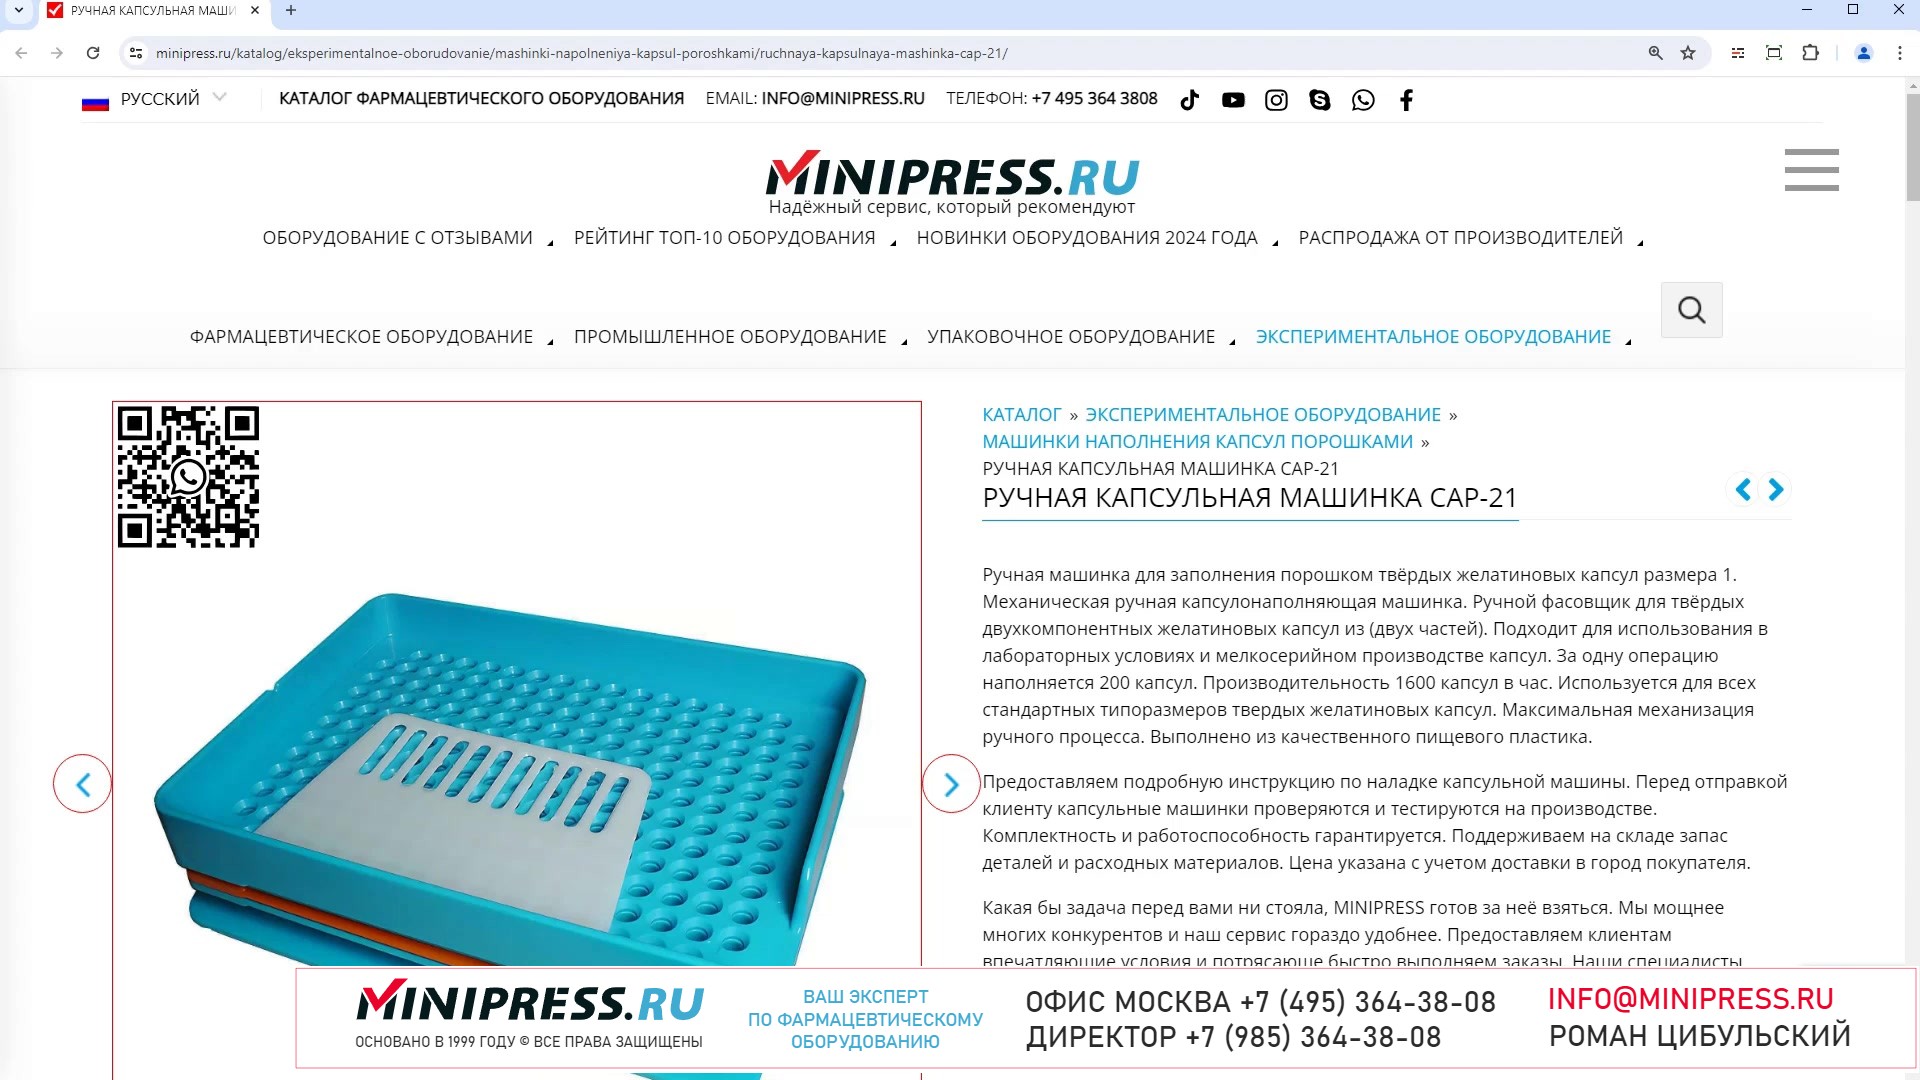 Minipress.ru Ручная капсульная машинка CAP-21